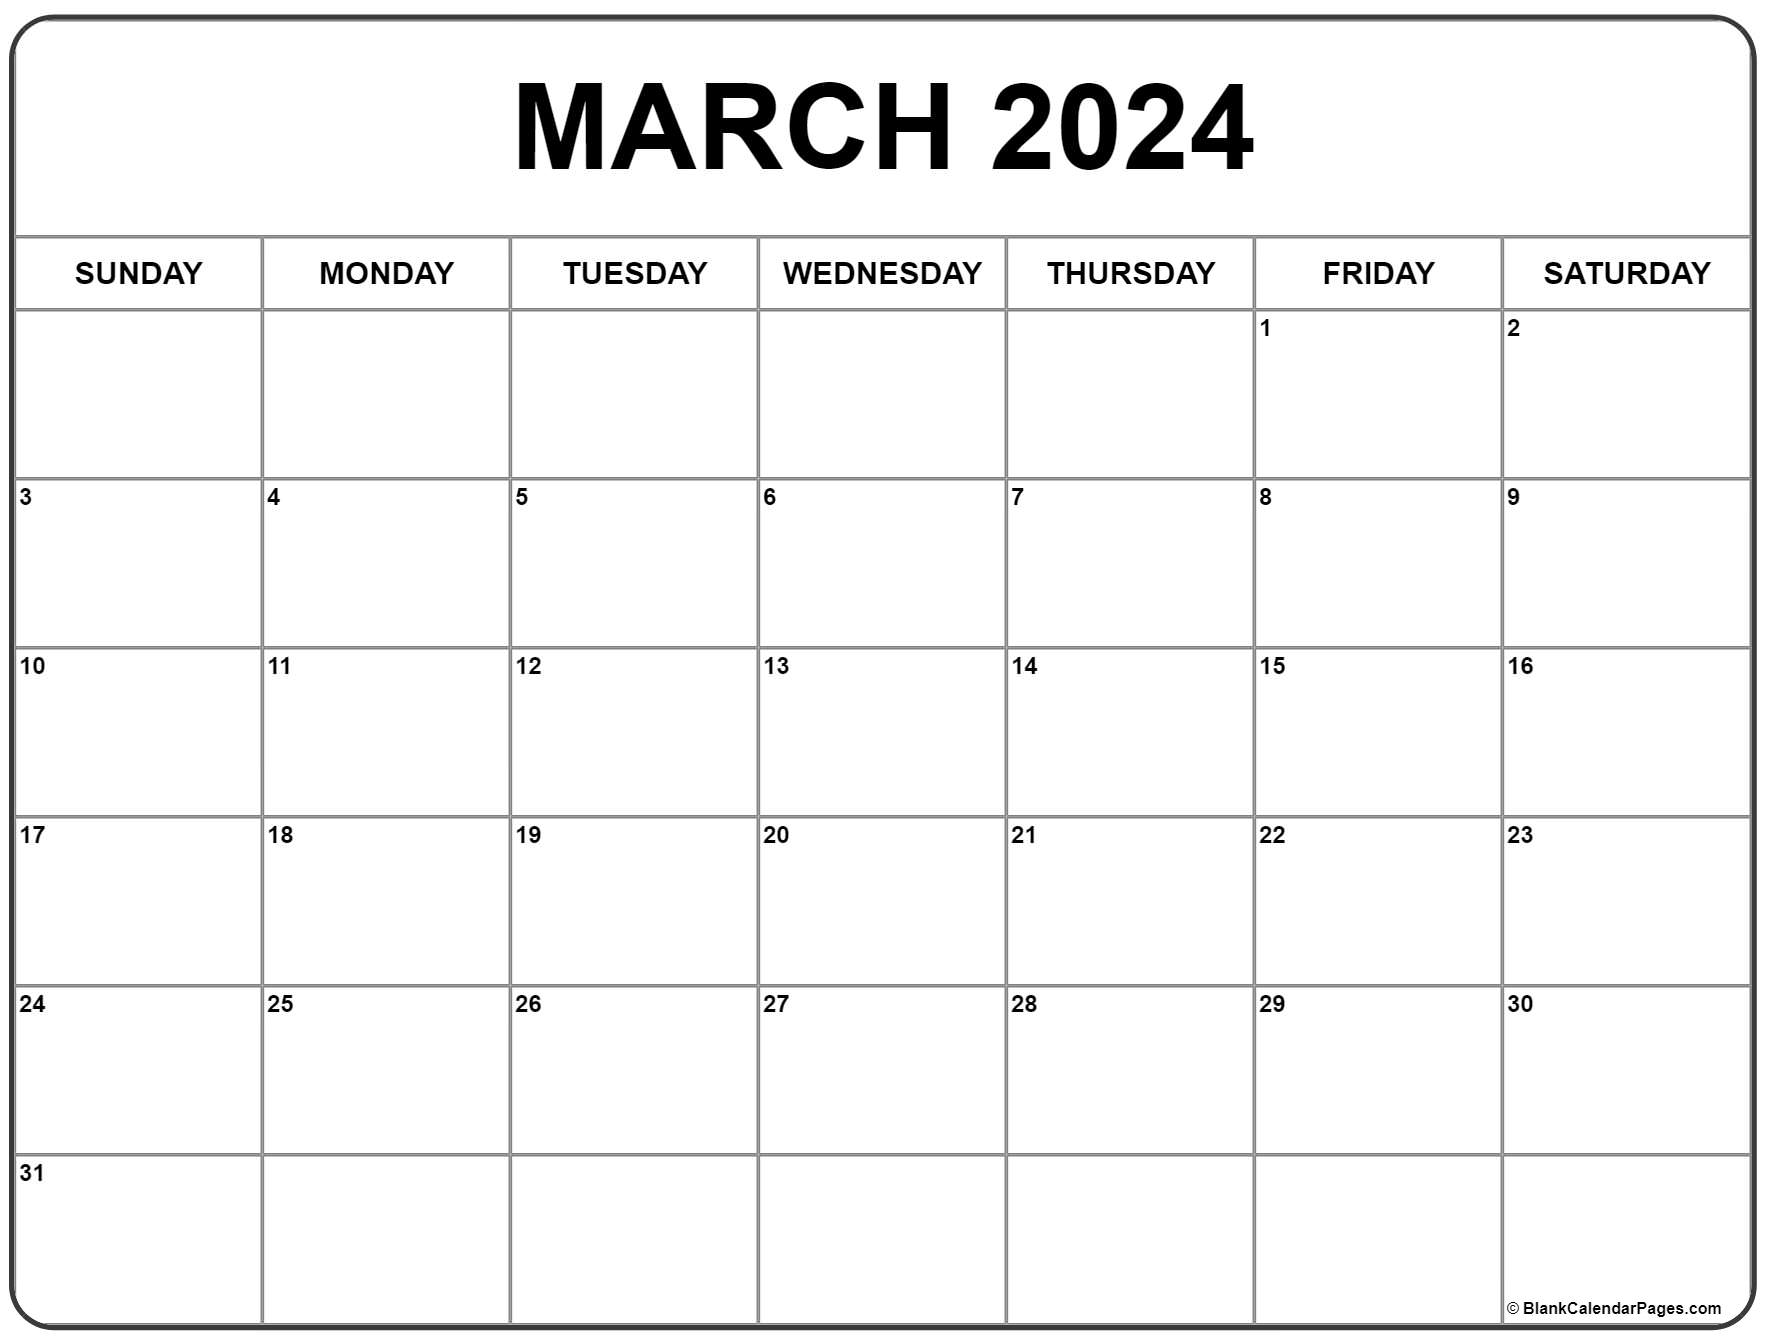 March 2024 Calendar | Free Printable Calendar for Free March Calendar 2024 Printable